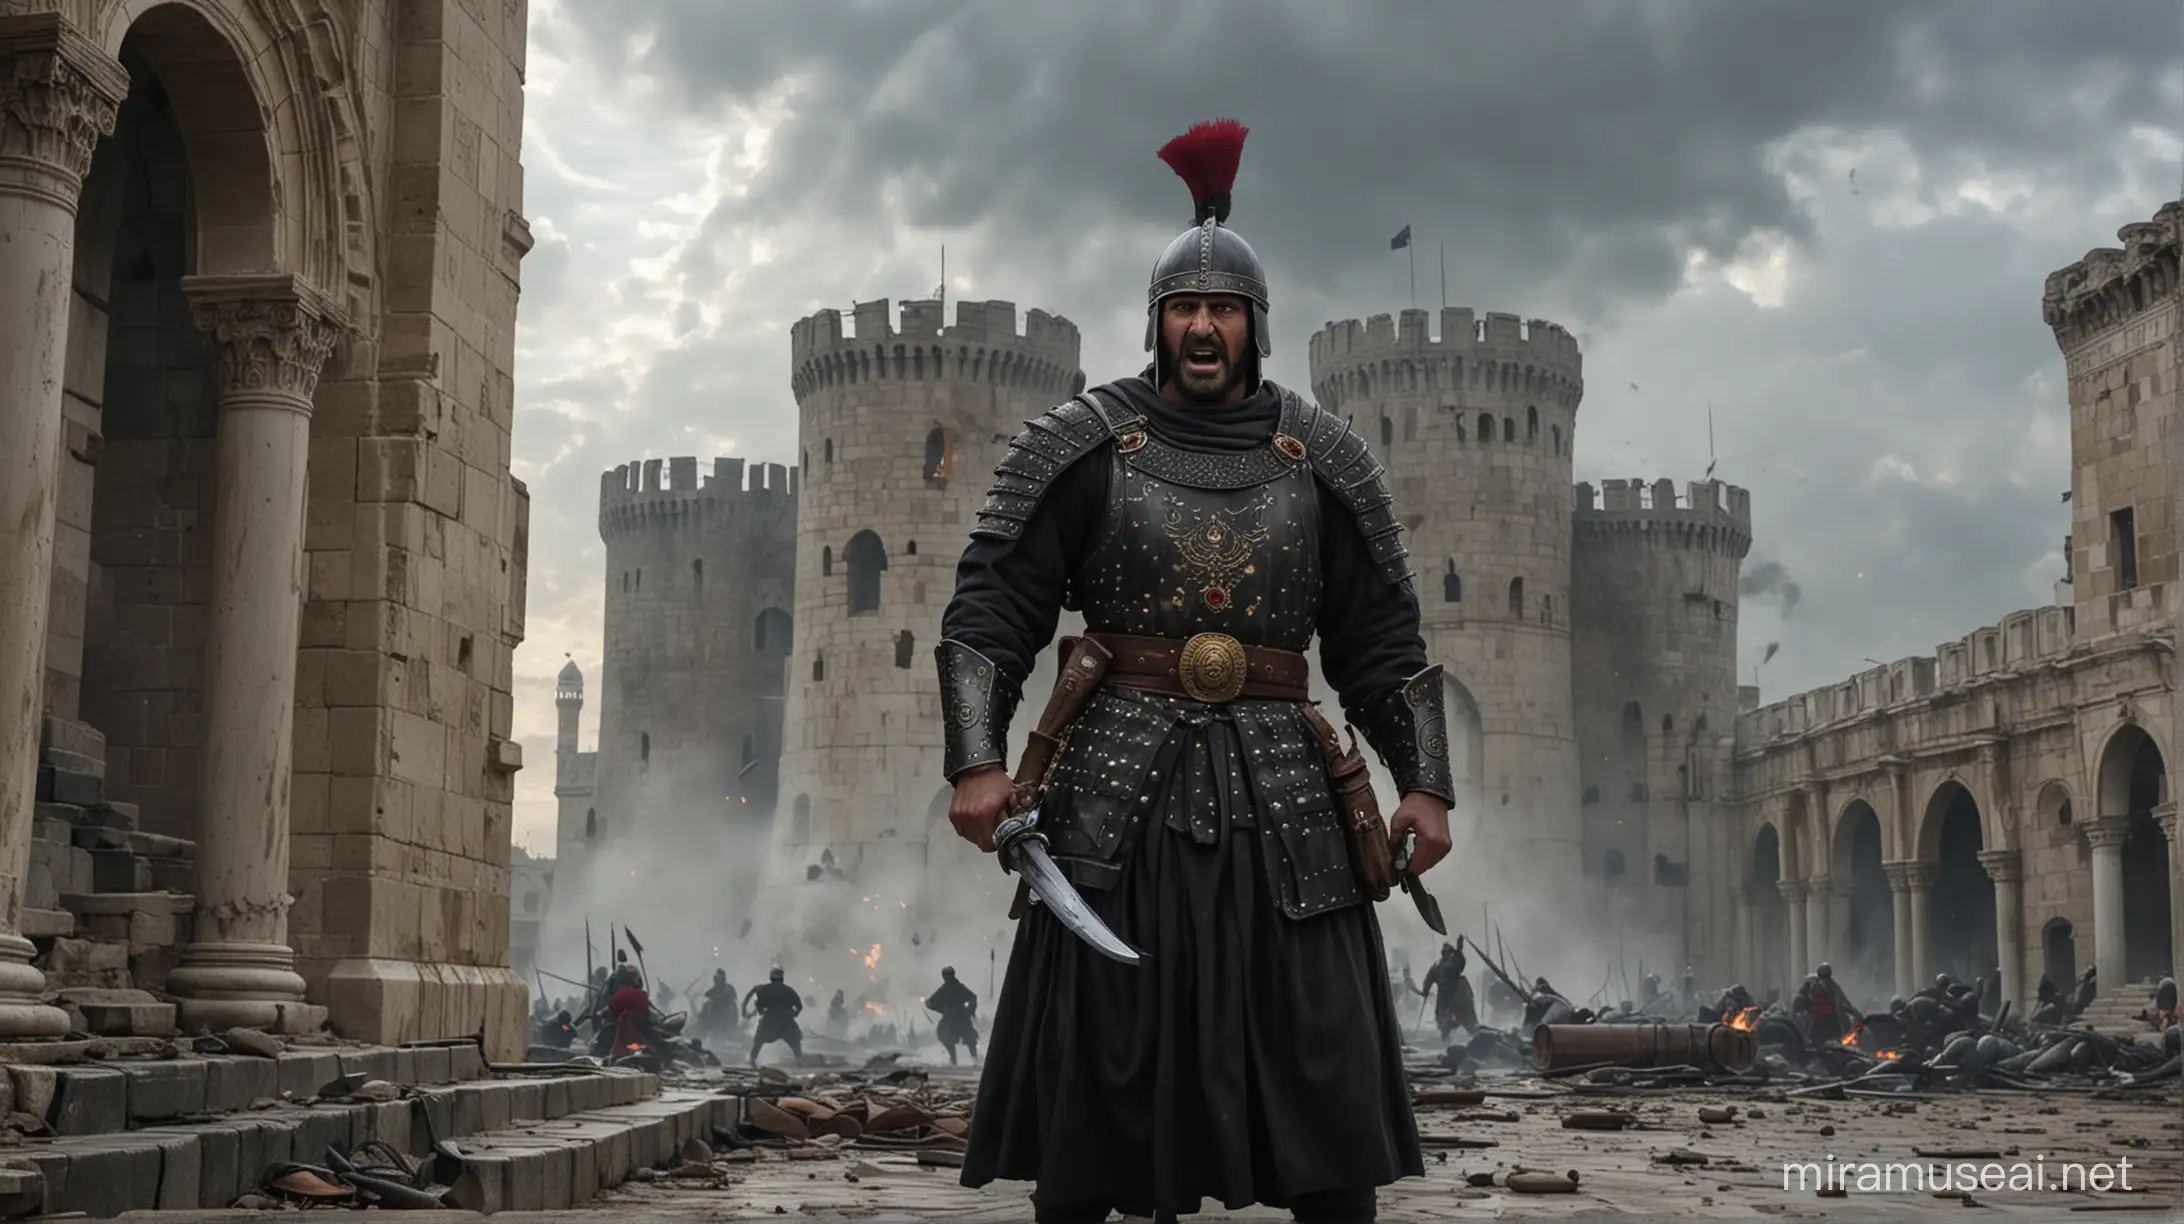 ByzantineOttoman Warrior Bombarding Circular Palace in Constantinople